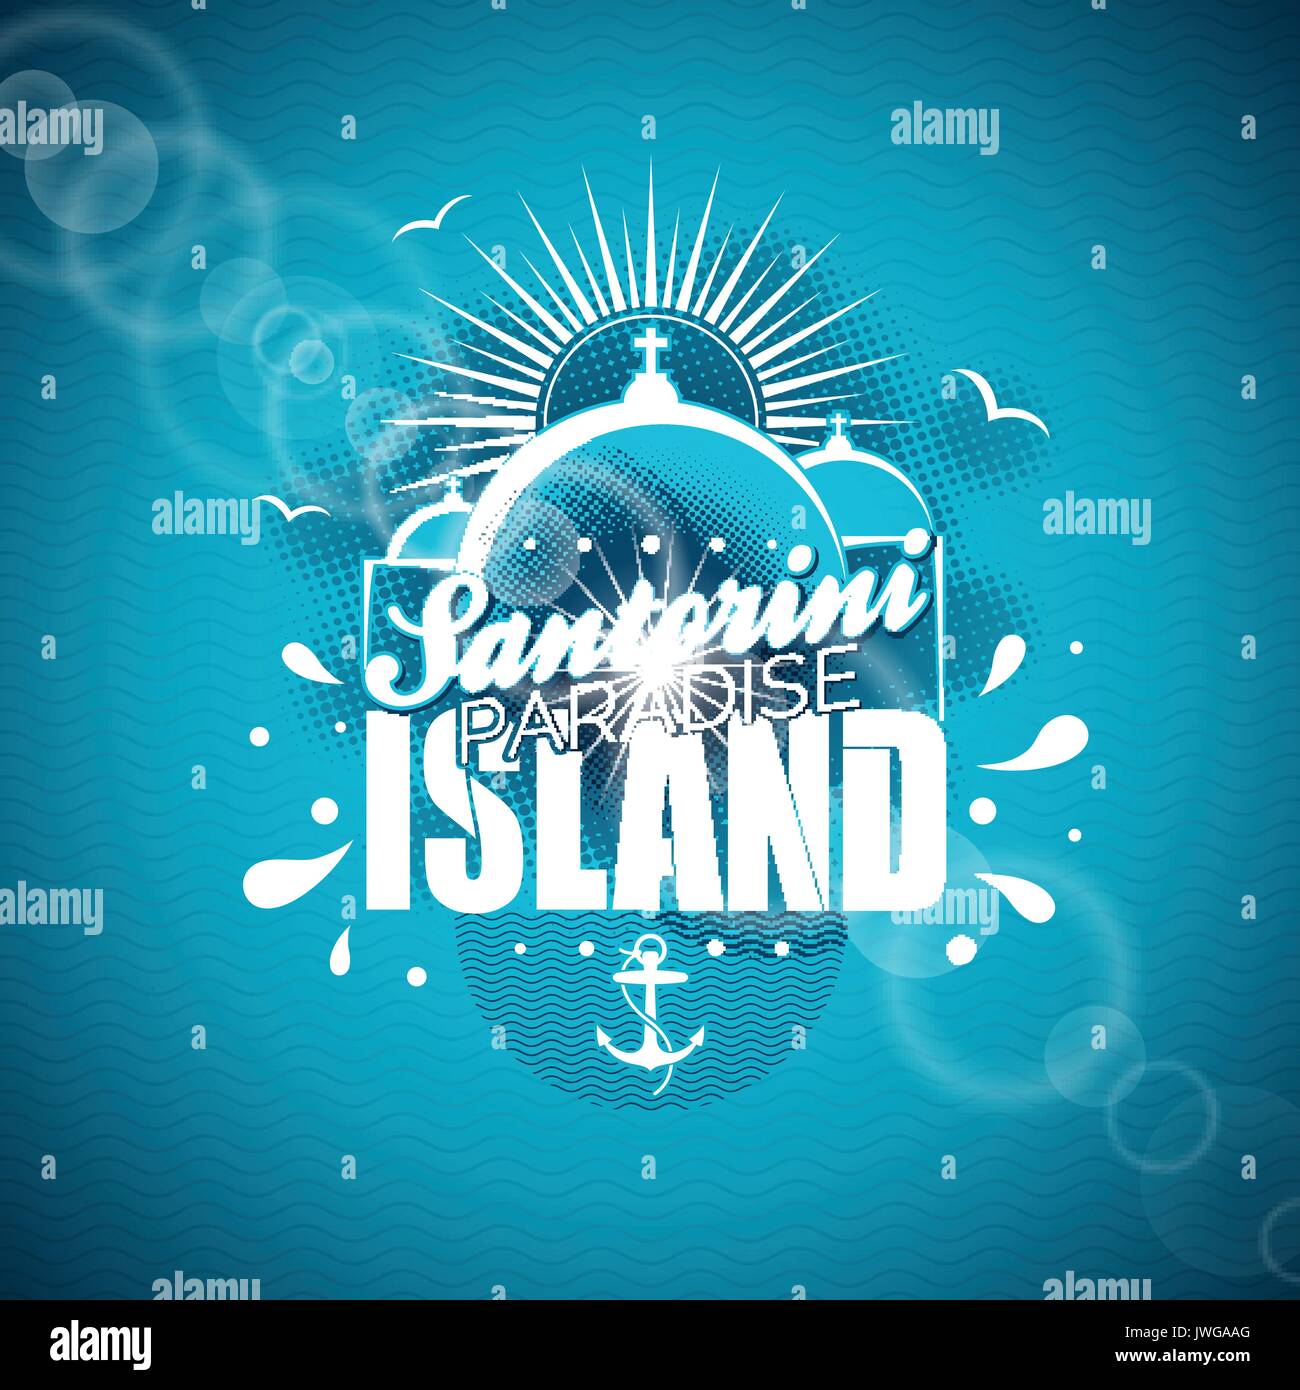 Vector Santorini Paradise Island illustration with typographic design on blue background. Eps10 illustration. Stock Vector